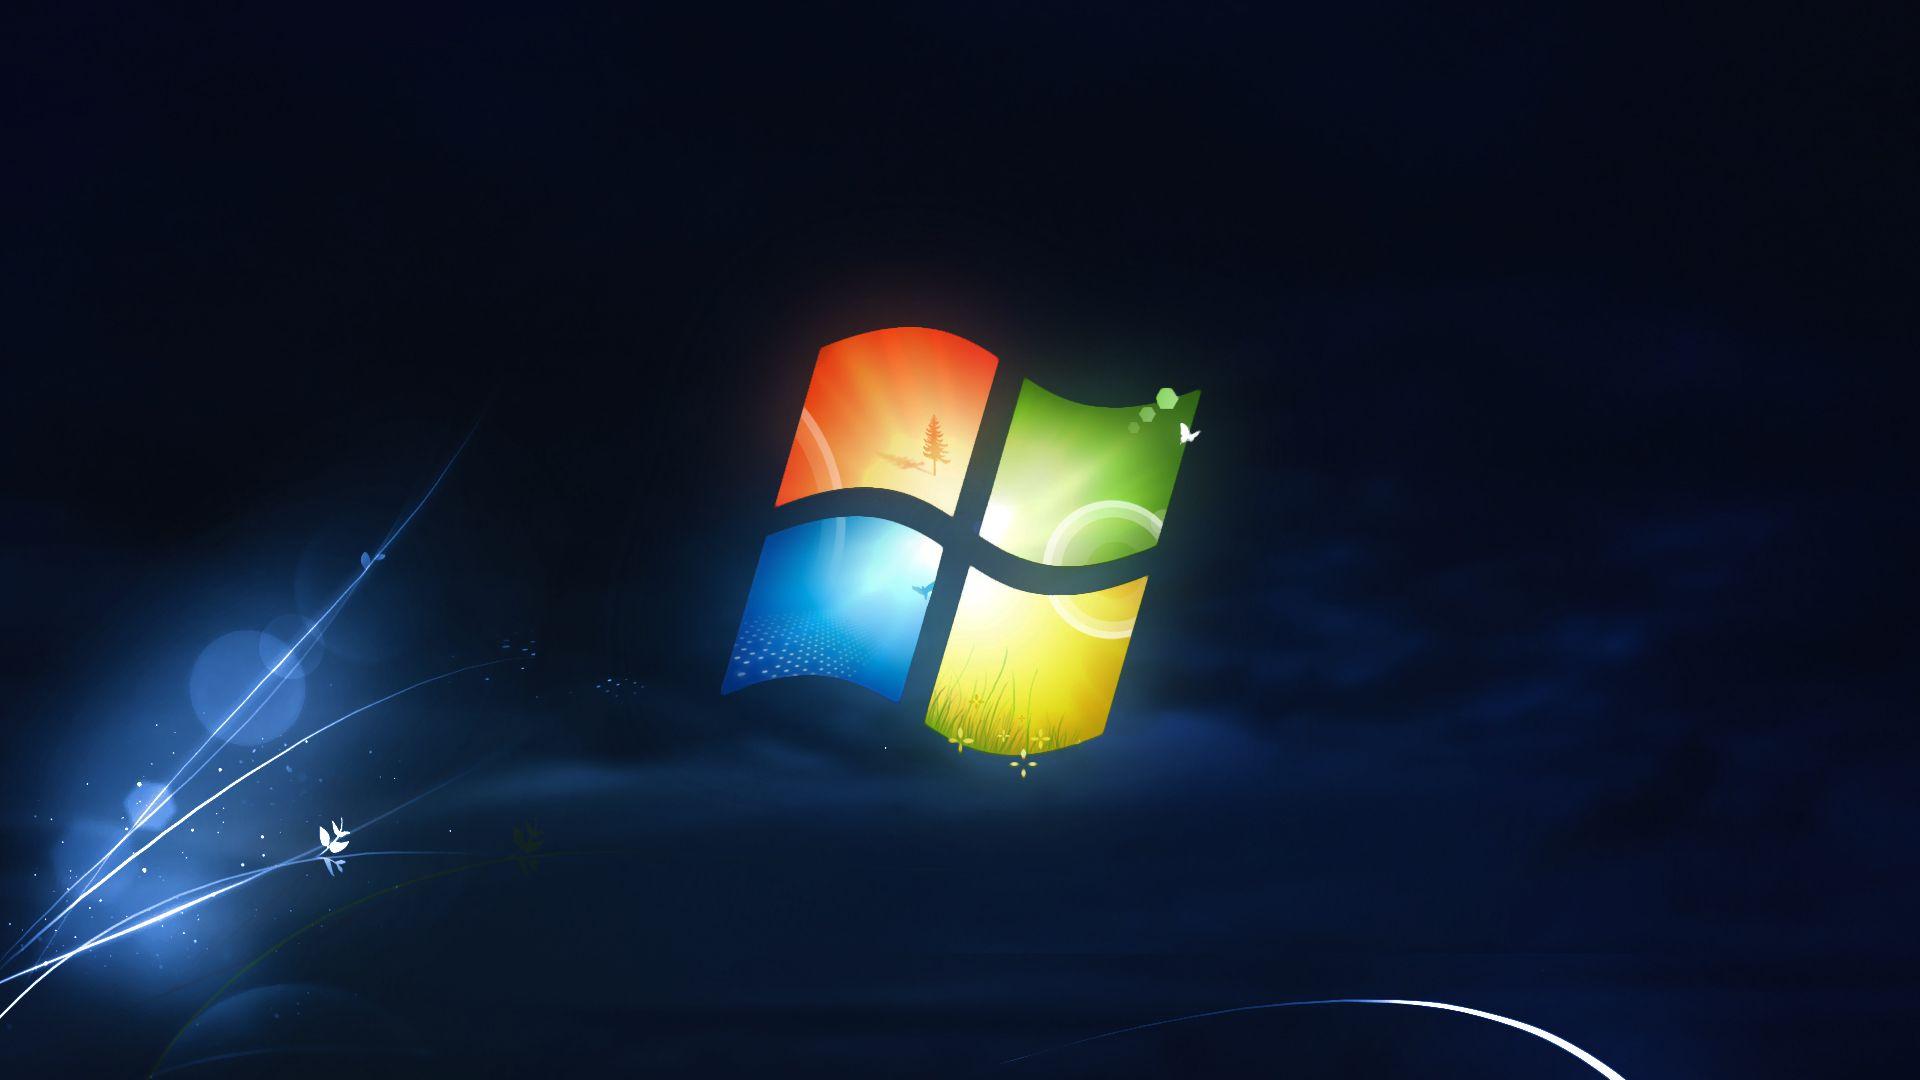 Microsoft Desktop Backgrounds 1920x1080